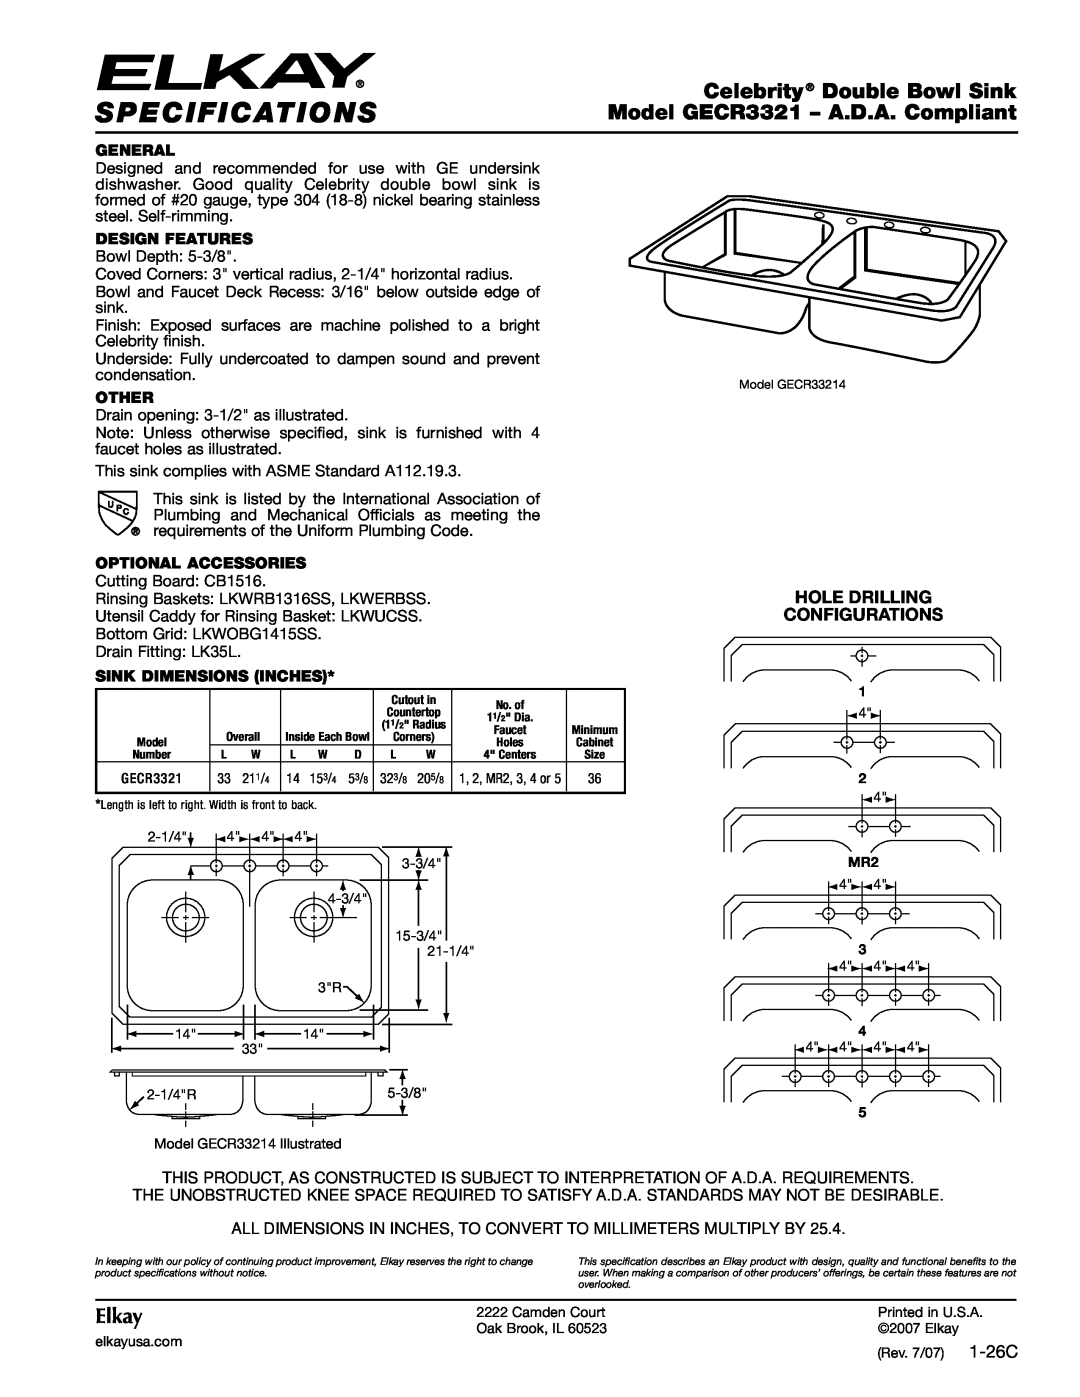 Elkay specifications Specifications, Celebrity Double Bowl Sink, Model GECR3321 - A.D.A. Compliant, Elkay, General 